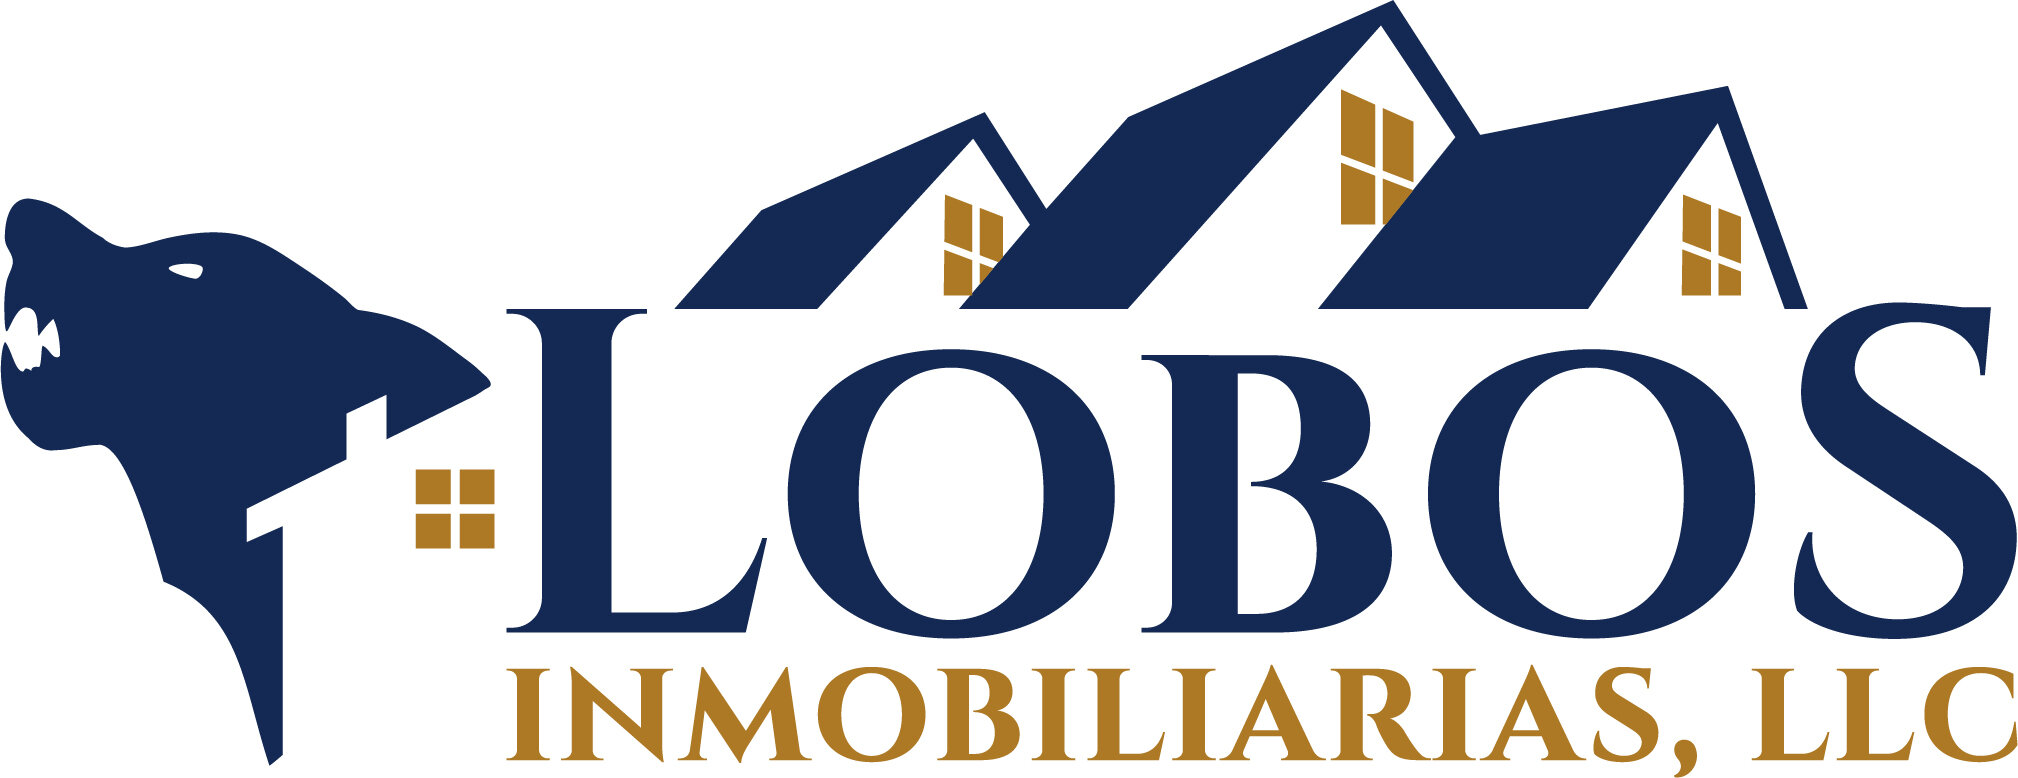 Lobos Flips logo